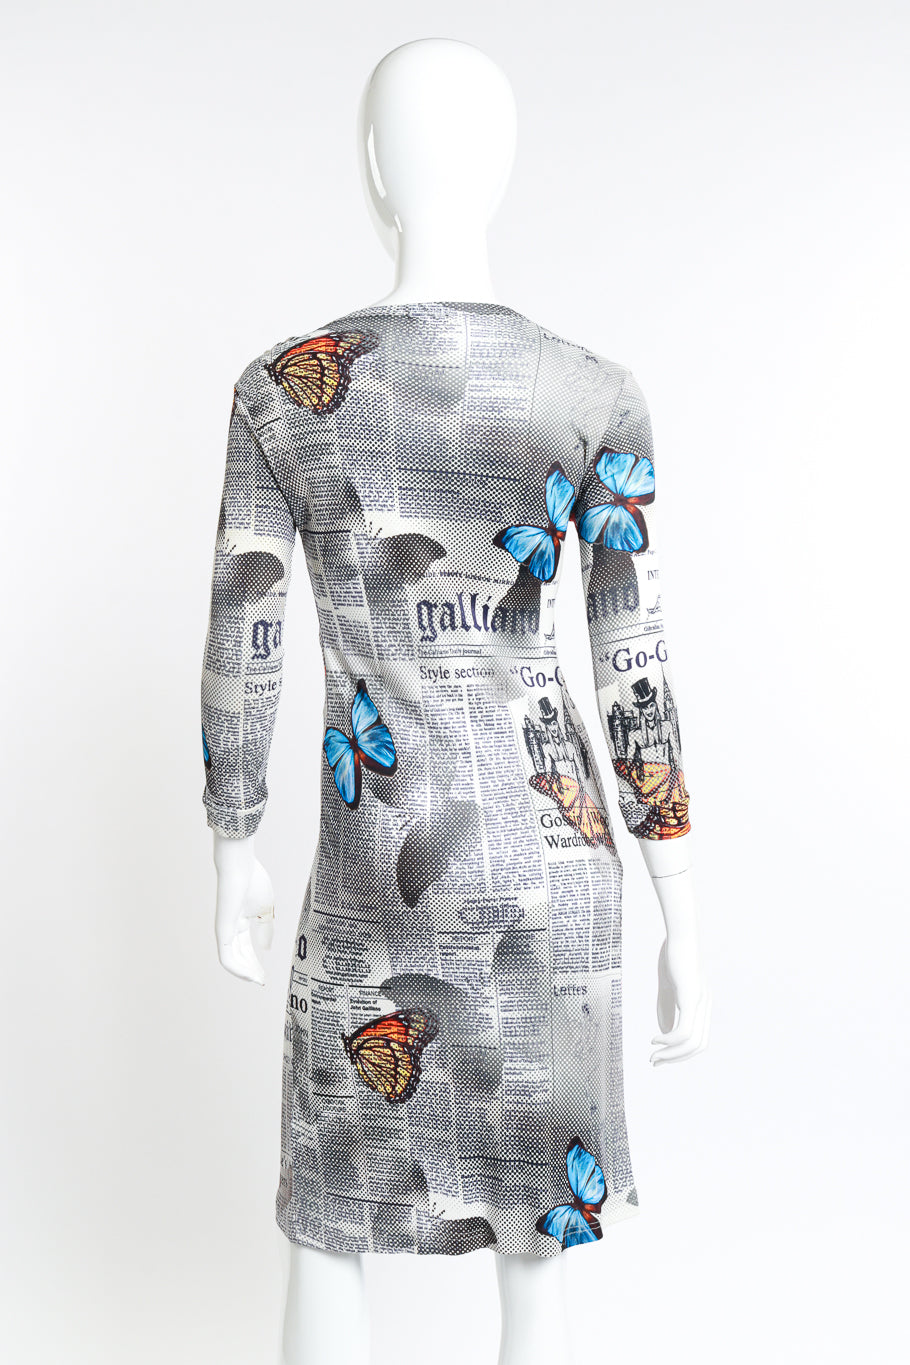 Vintage John Galliano Butterfly Newspaper Print Dress back on mannequin @recess la